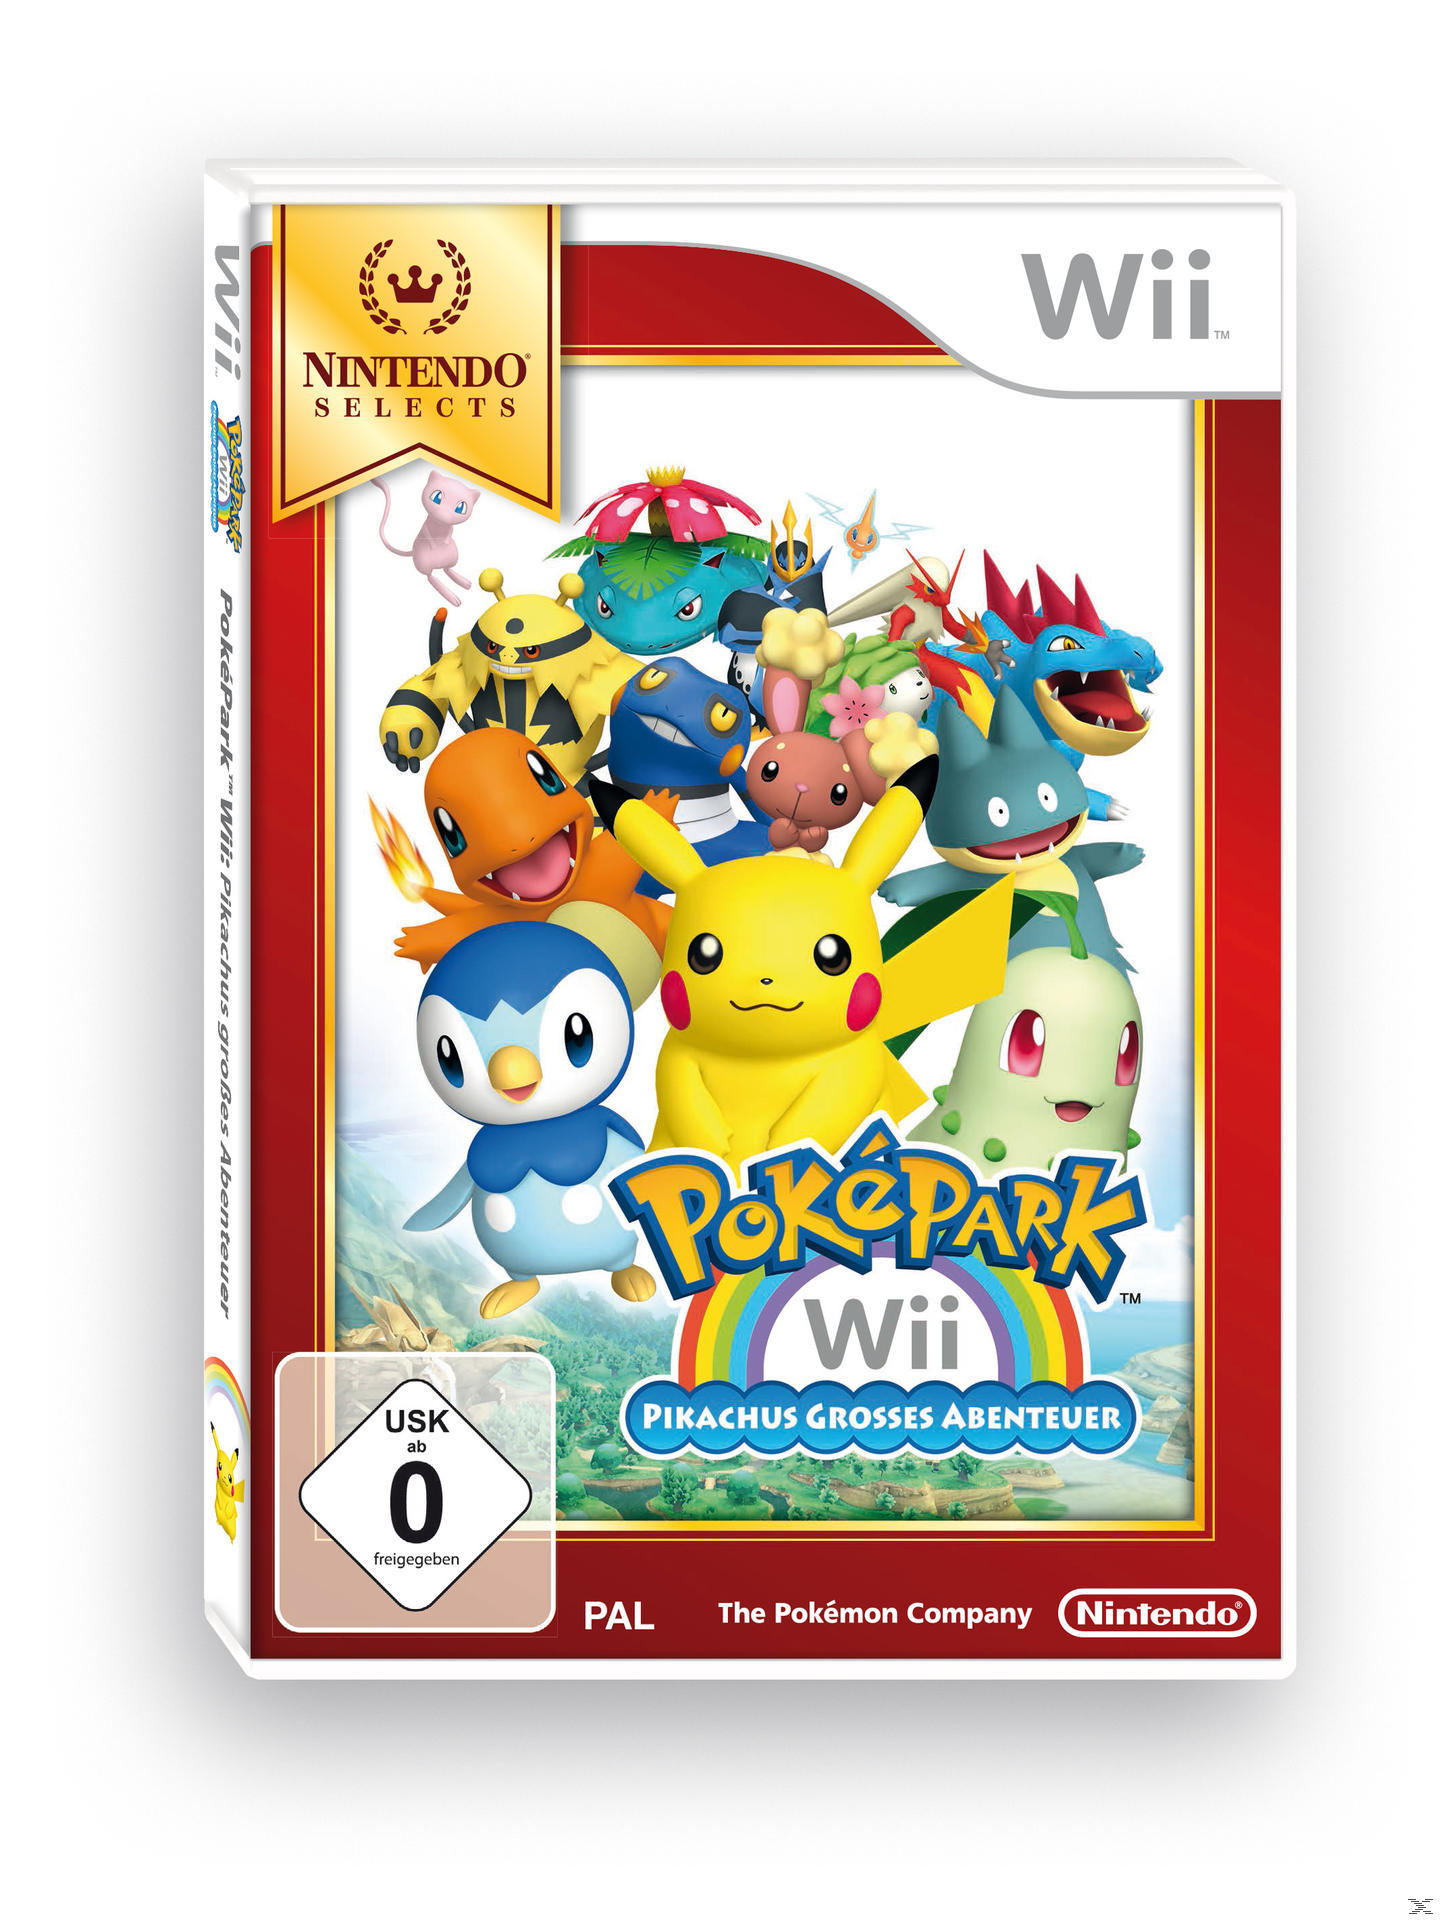 Wii] Selects) Abenteuer (Nintendo großes - Wii: Pikachus PokéPark [Nintendo